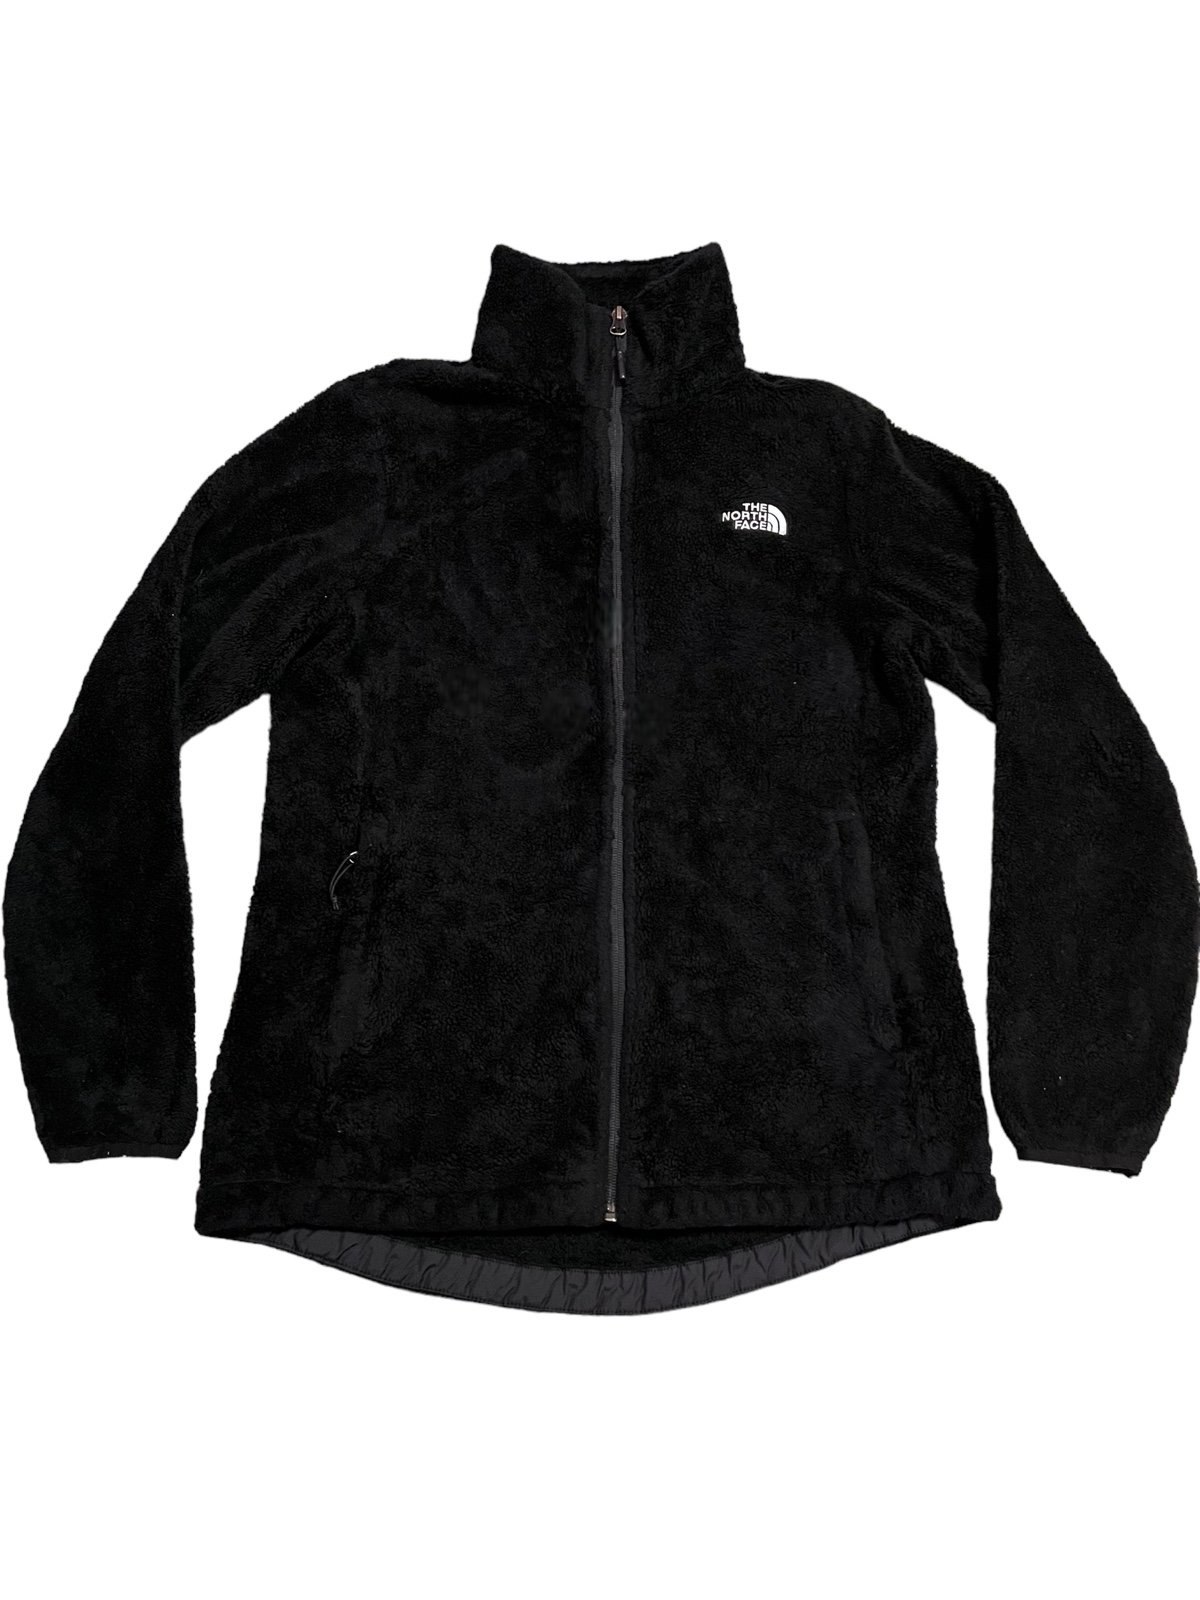 Nice The North Face Womens Osito Full Zip Soft Fuzzy Fleece Jacket Black Size Medium J9lBMNuj4 hot sale